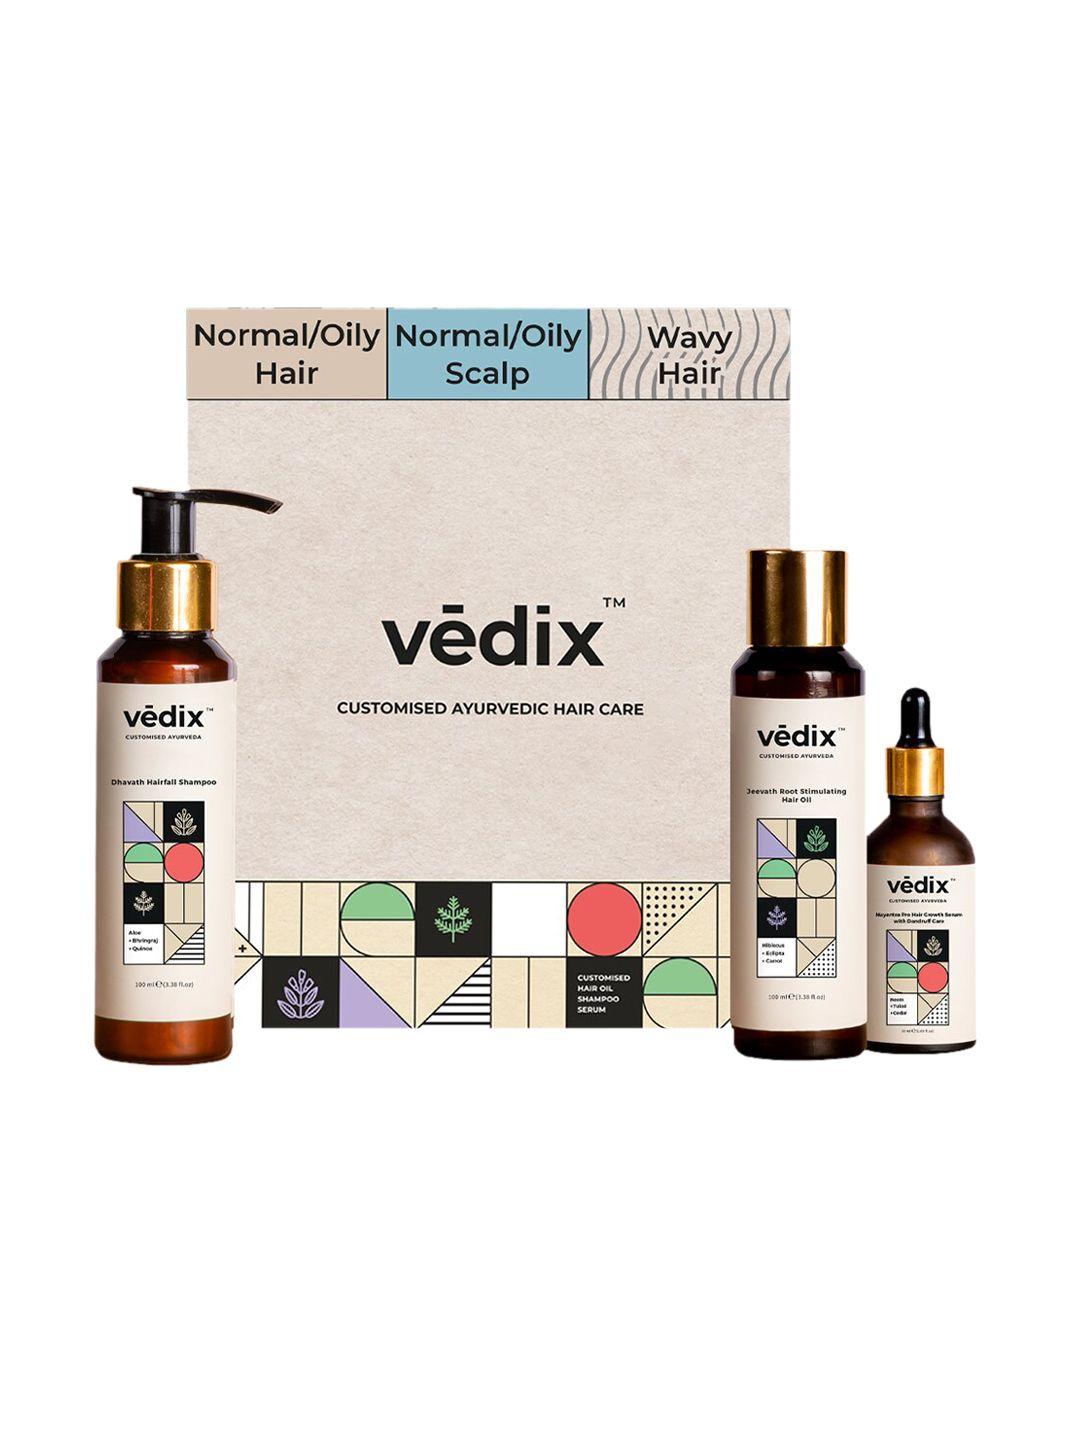 vedix customized hair fall control & dandruff care regimen- normal-oily scalp & wavy hair